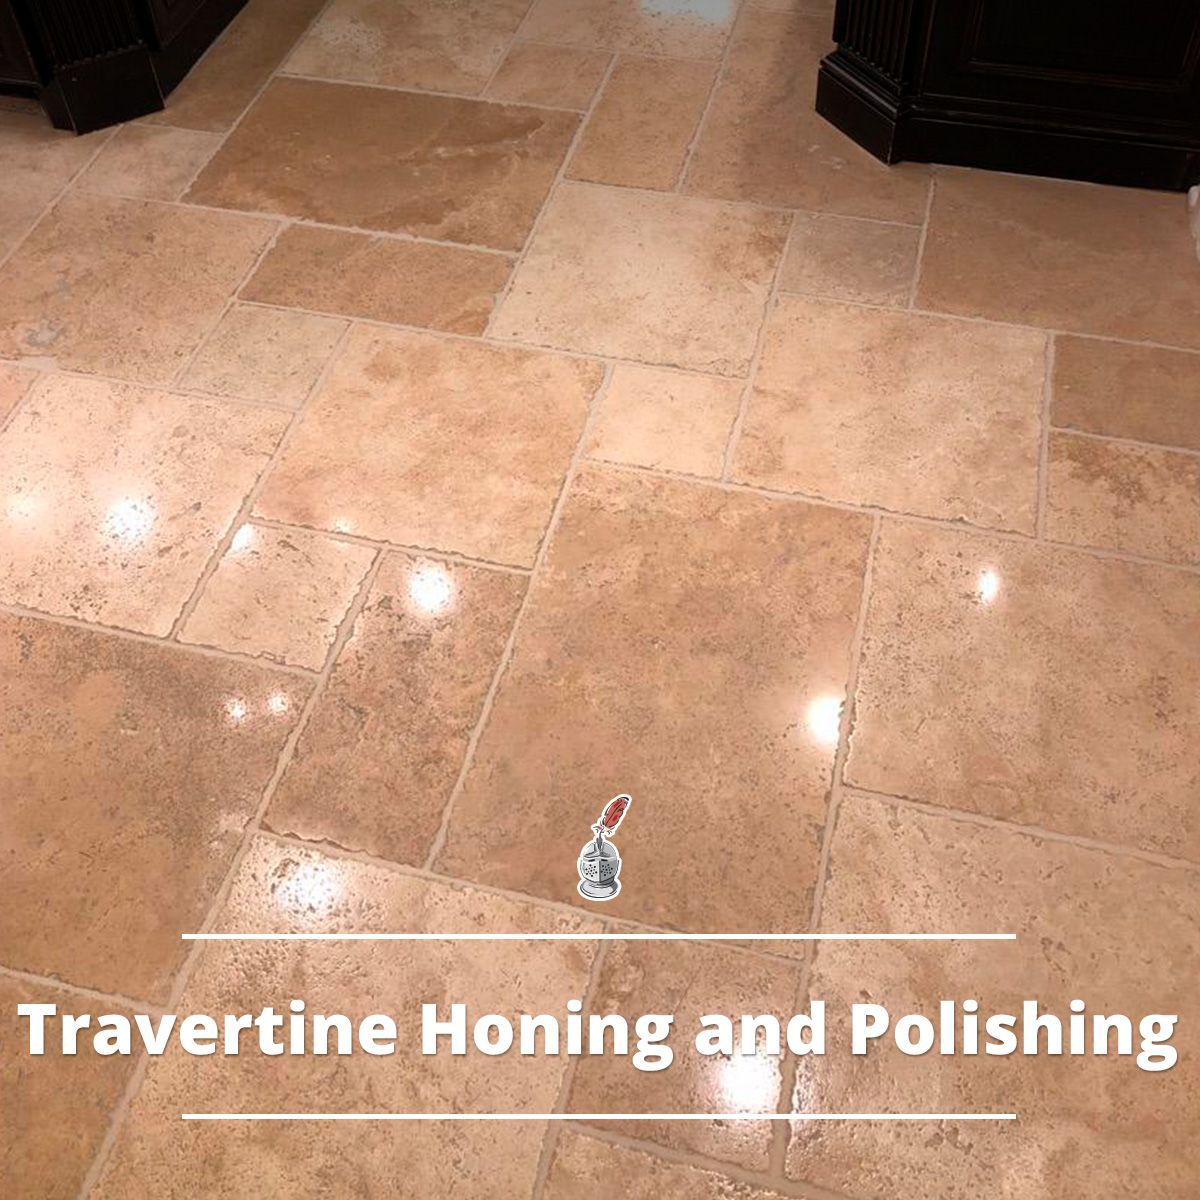 Travertine Honing and Polishing